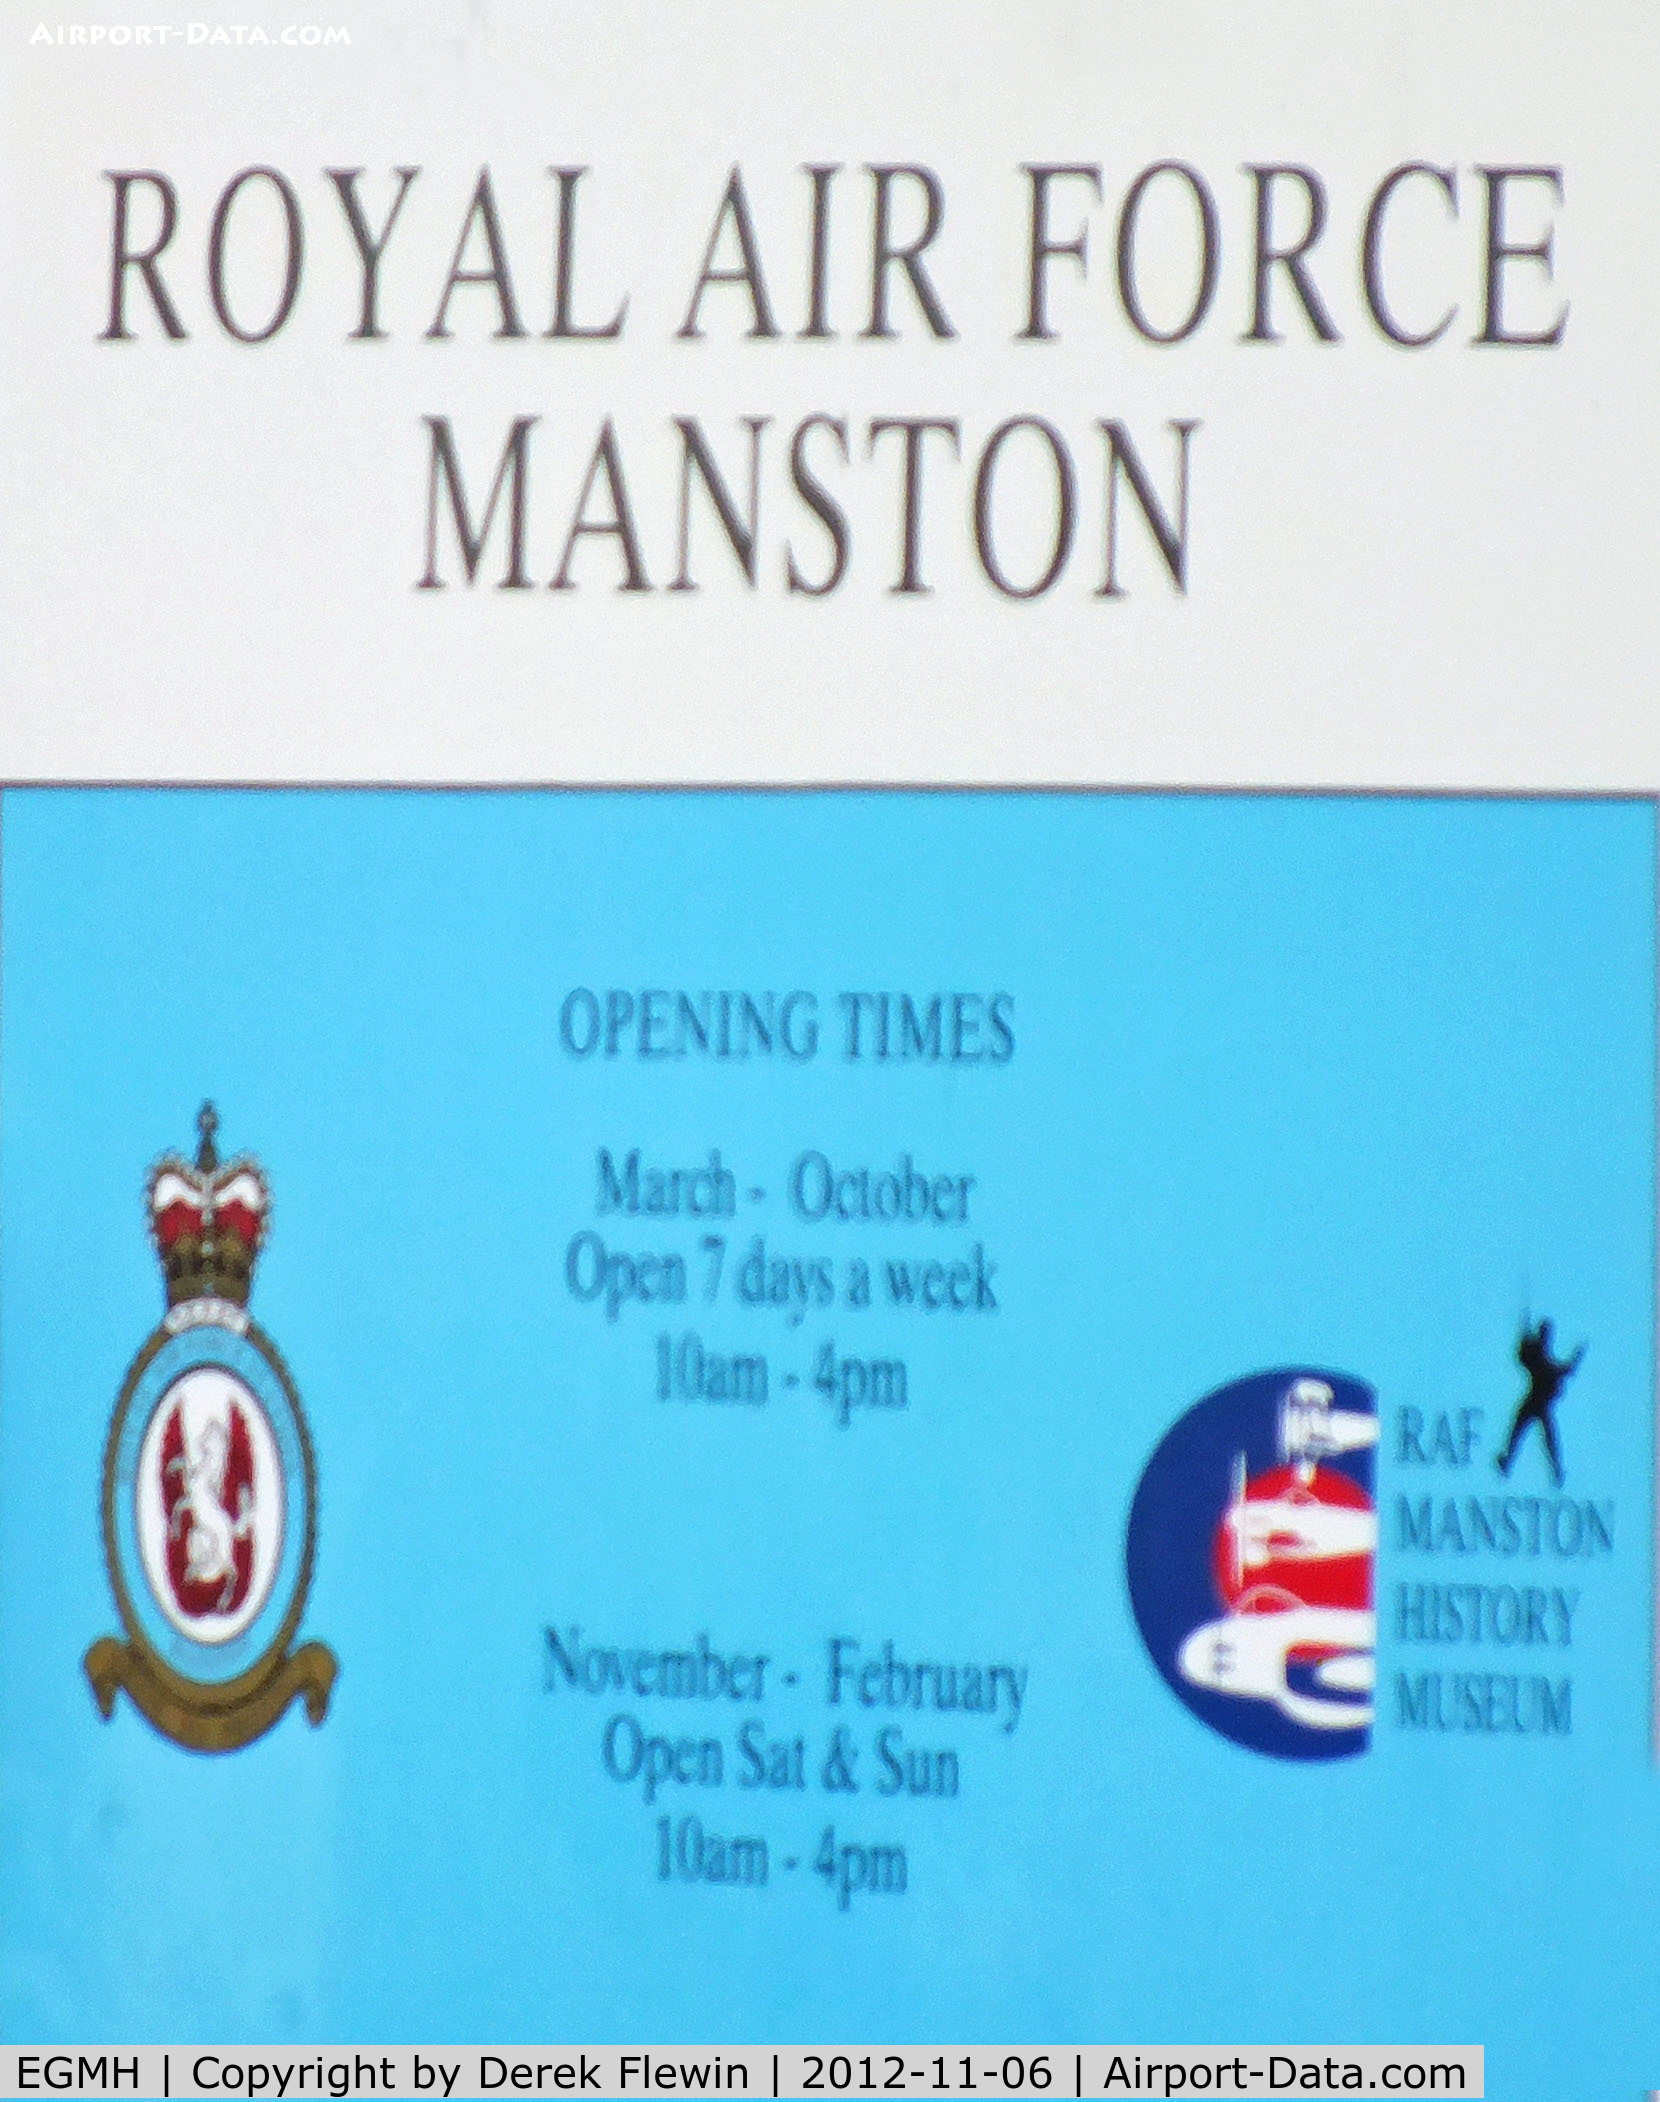 Kent International Airport, Canterbury, England United Kingdom (EGMH) - Sign on wall of RAF Manston History Museum.